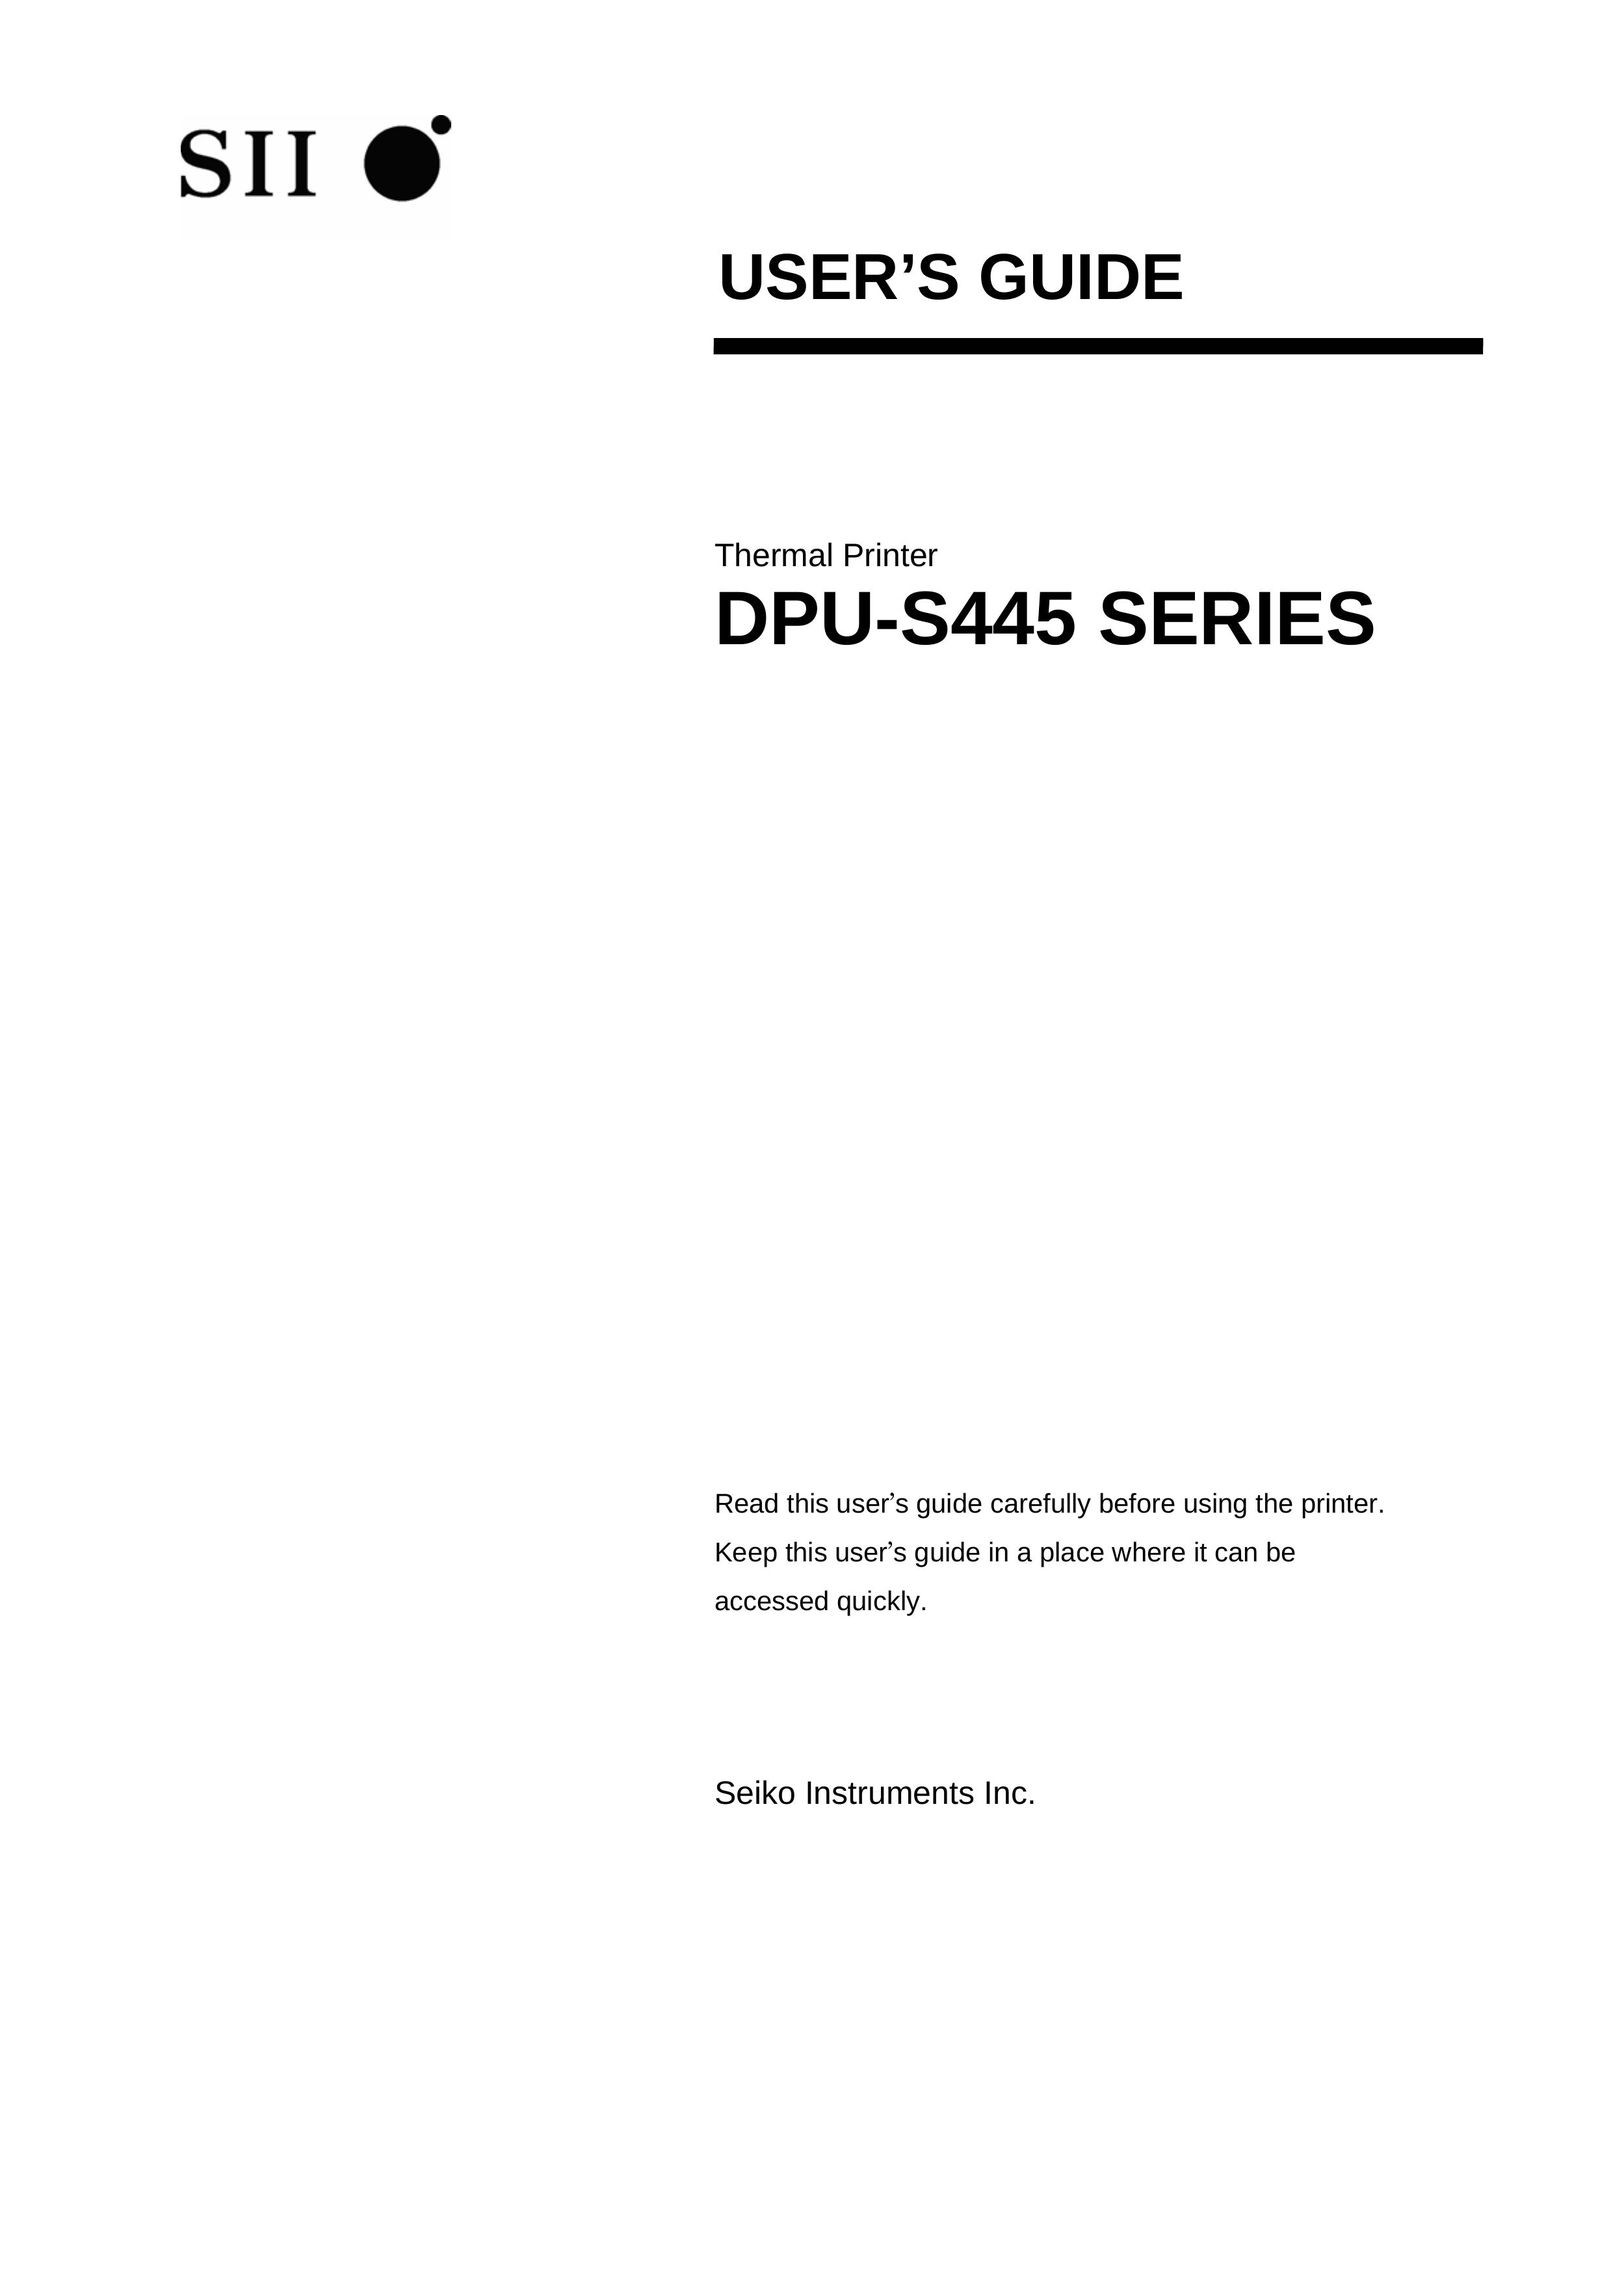 Seiko Instruments DPU-S445 Printer User Manual